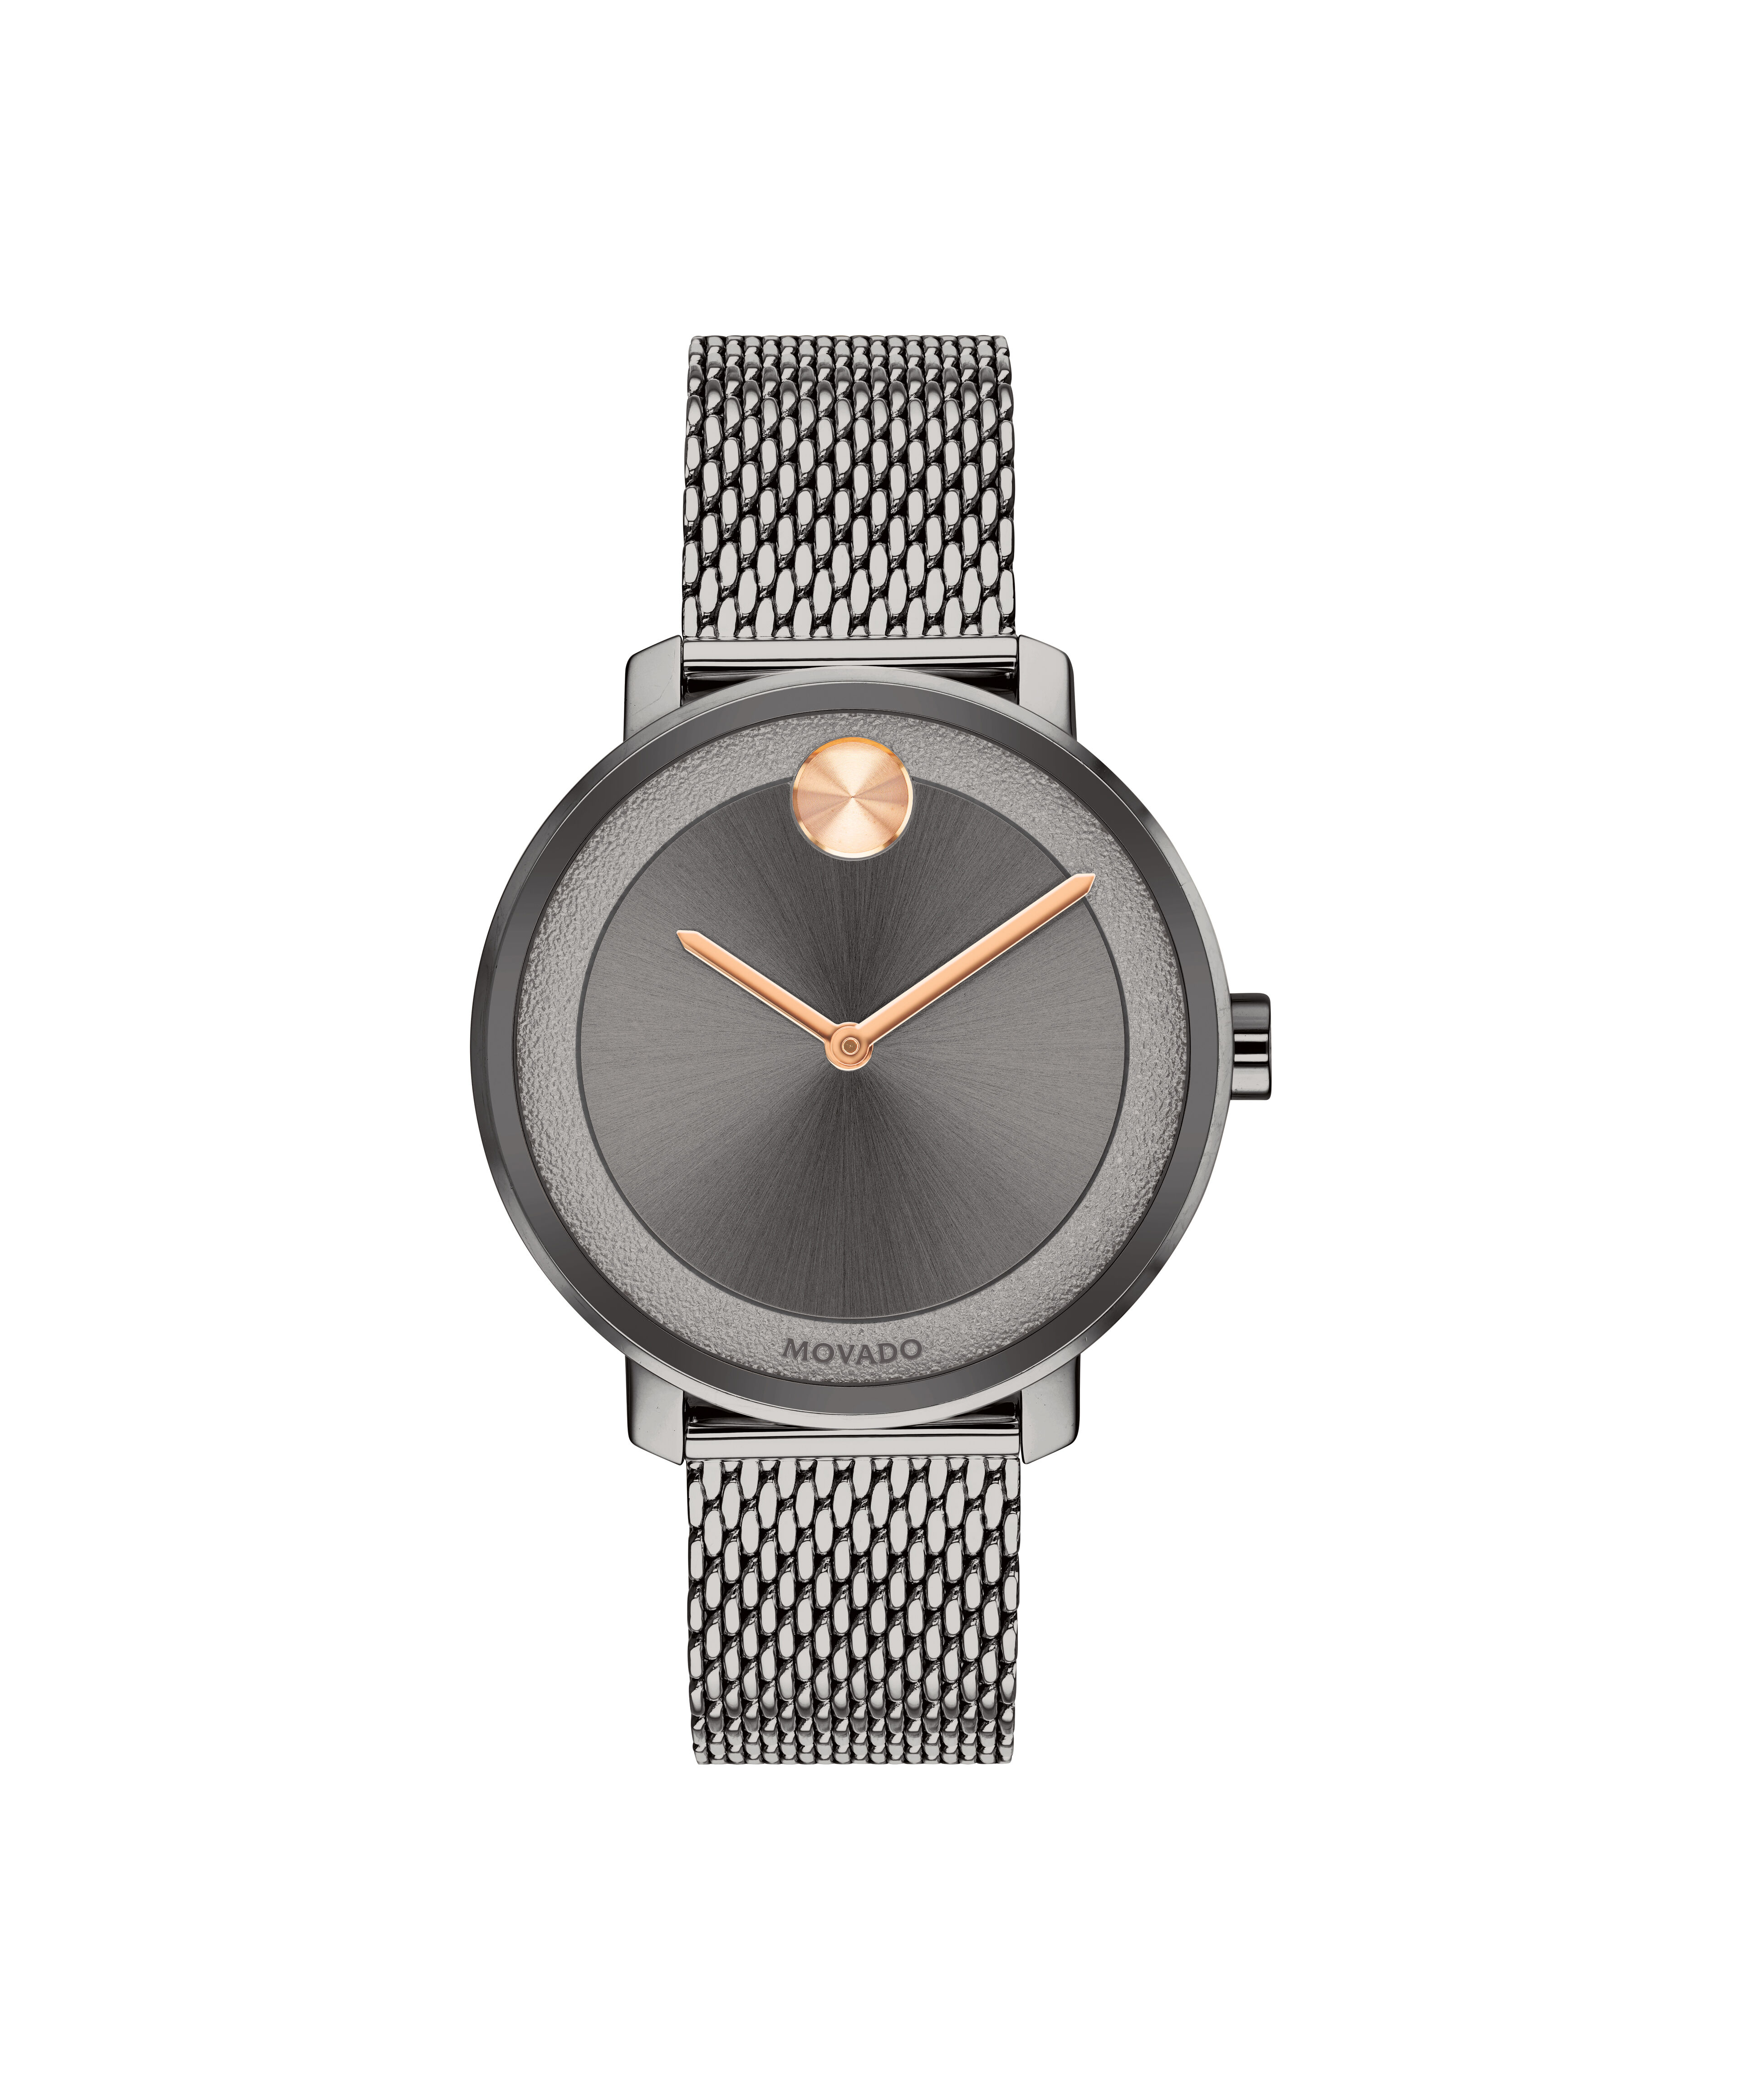 Replica Cartier Radieuse Watches